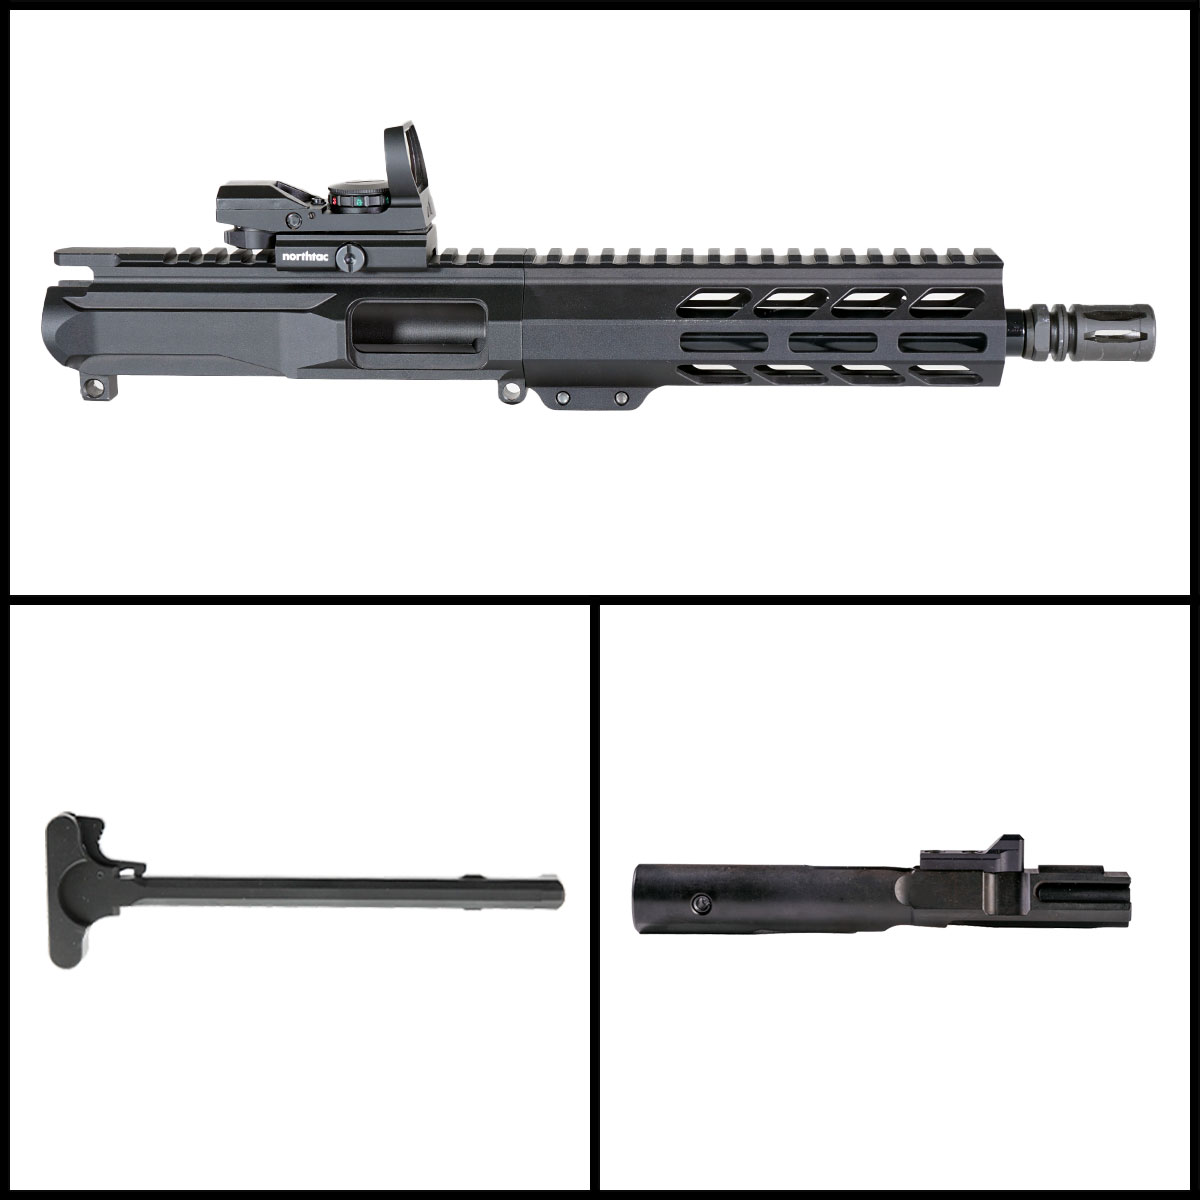 DDS 'Eternal Night Gen 2 w/ MVR' 8.5-inch AR-15 9mm Nitride Pistol Complete Upper Build Kit